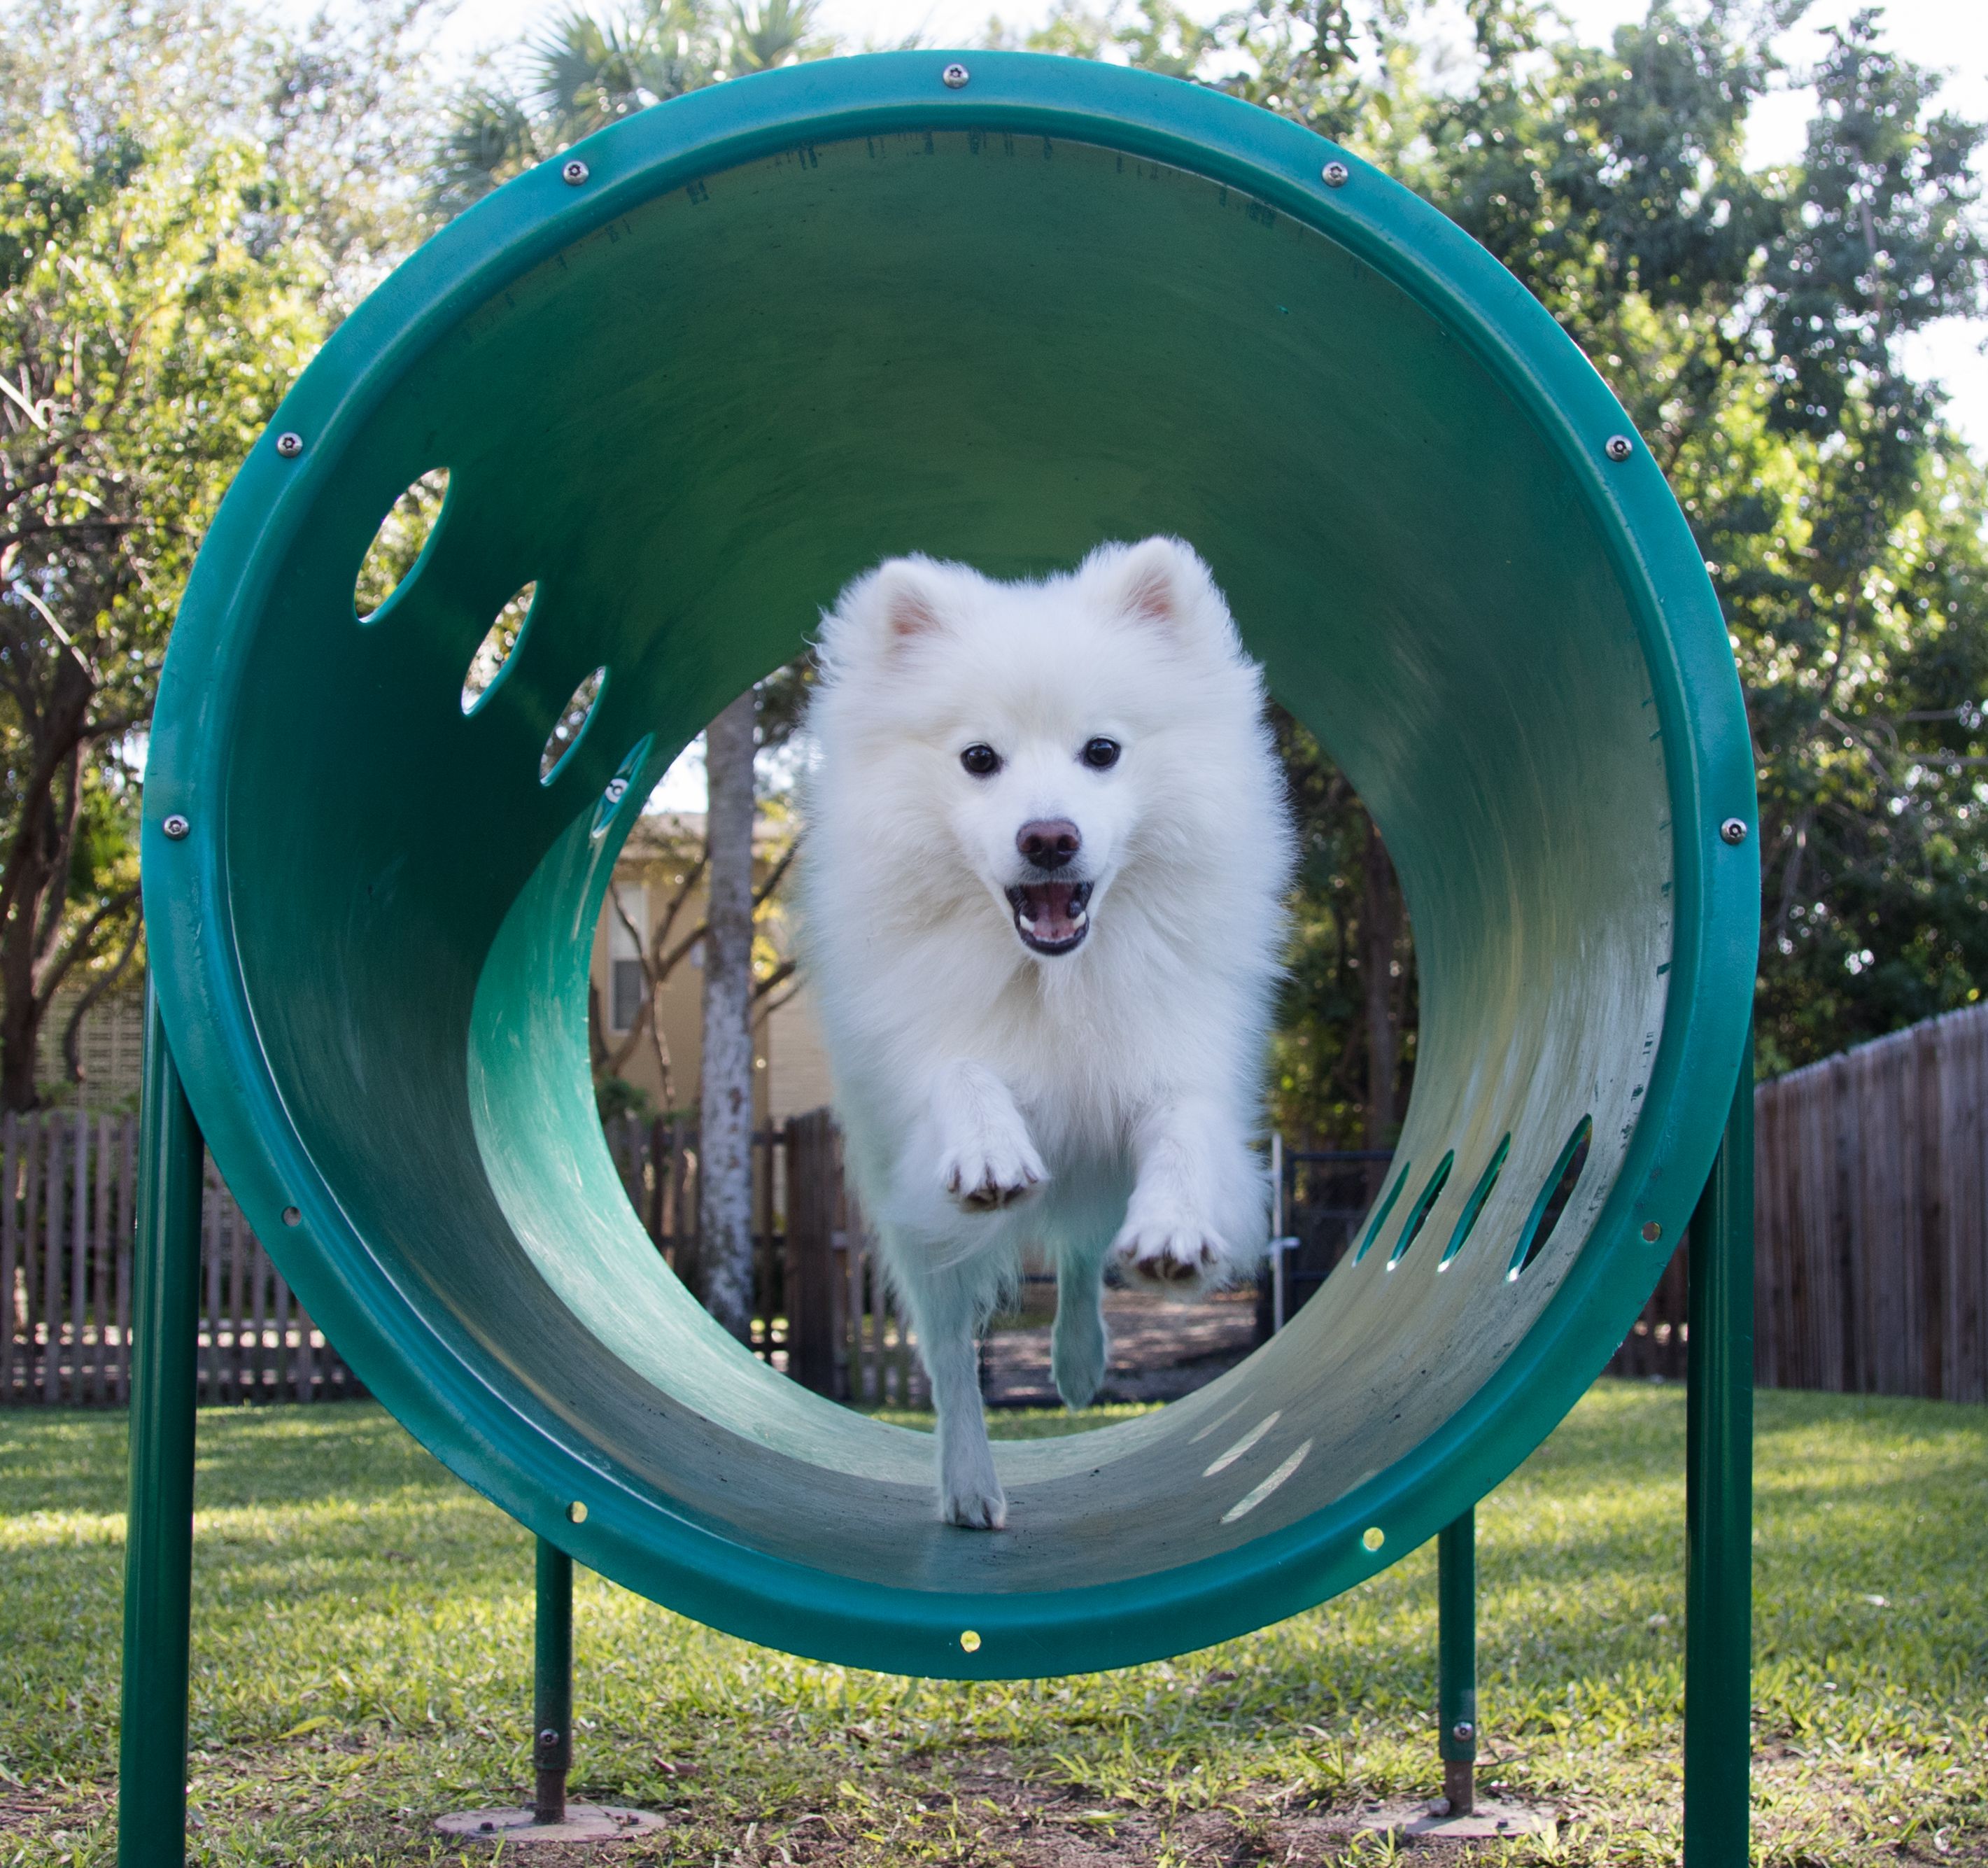 American eskimo dog on agility equipment at park